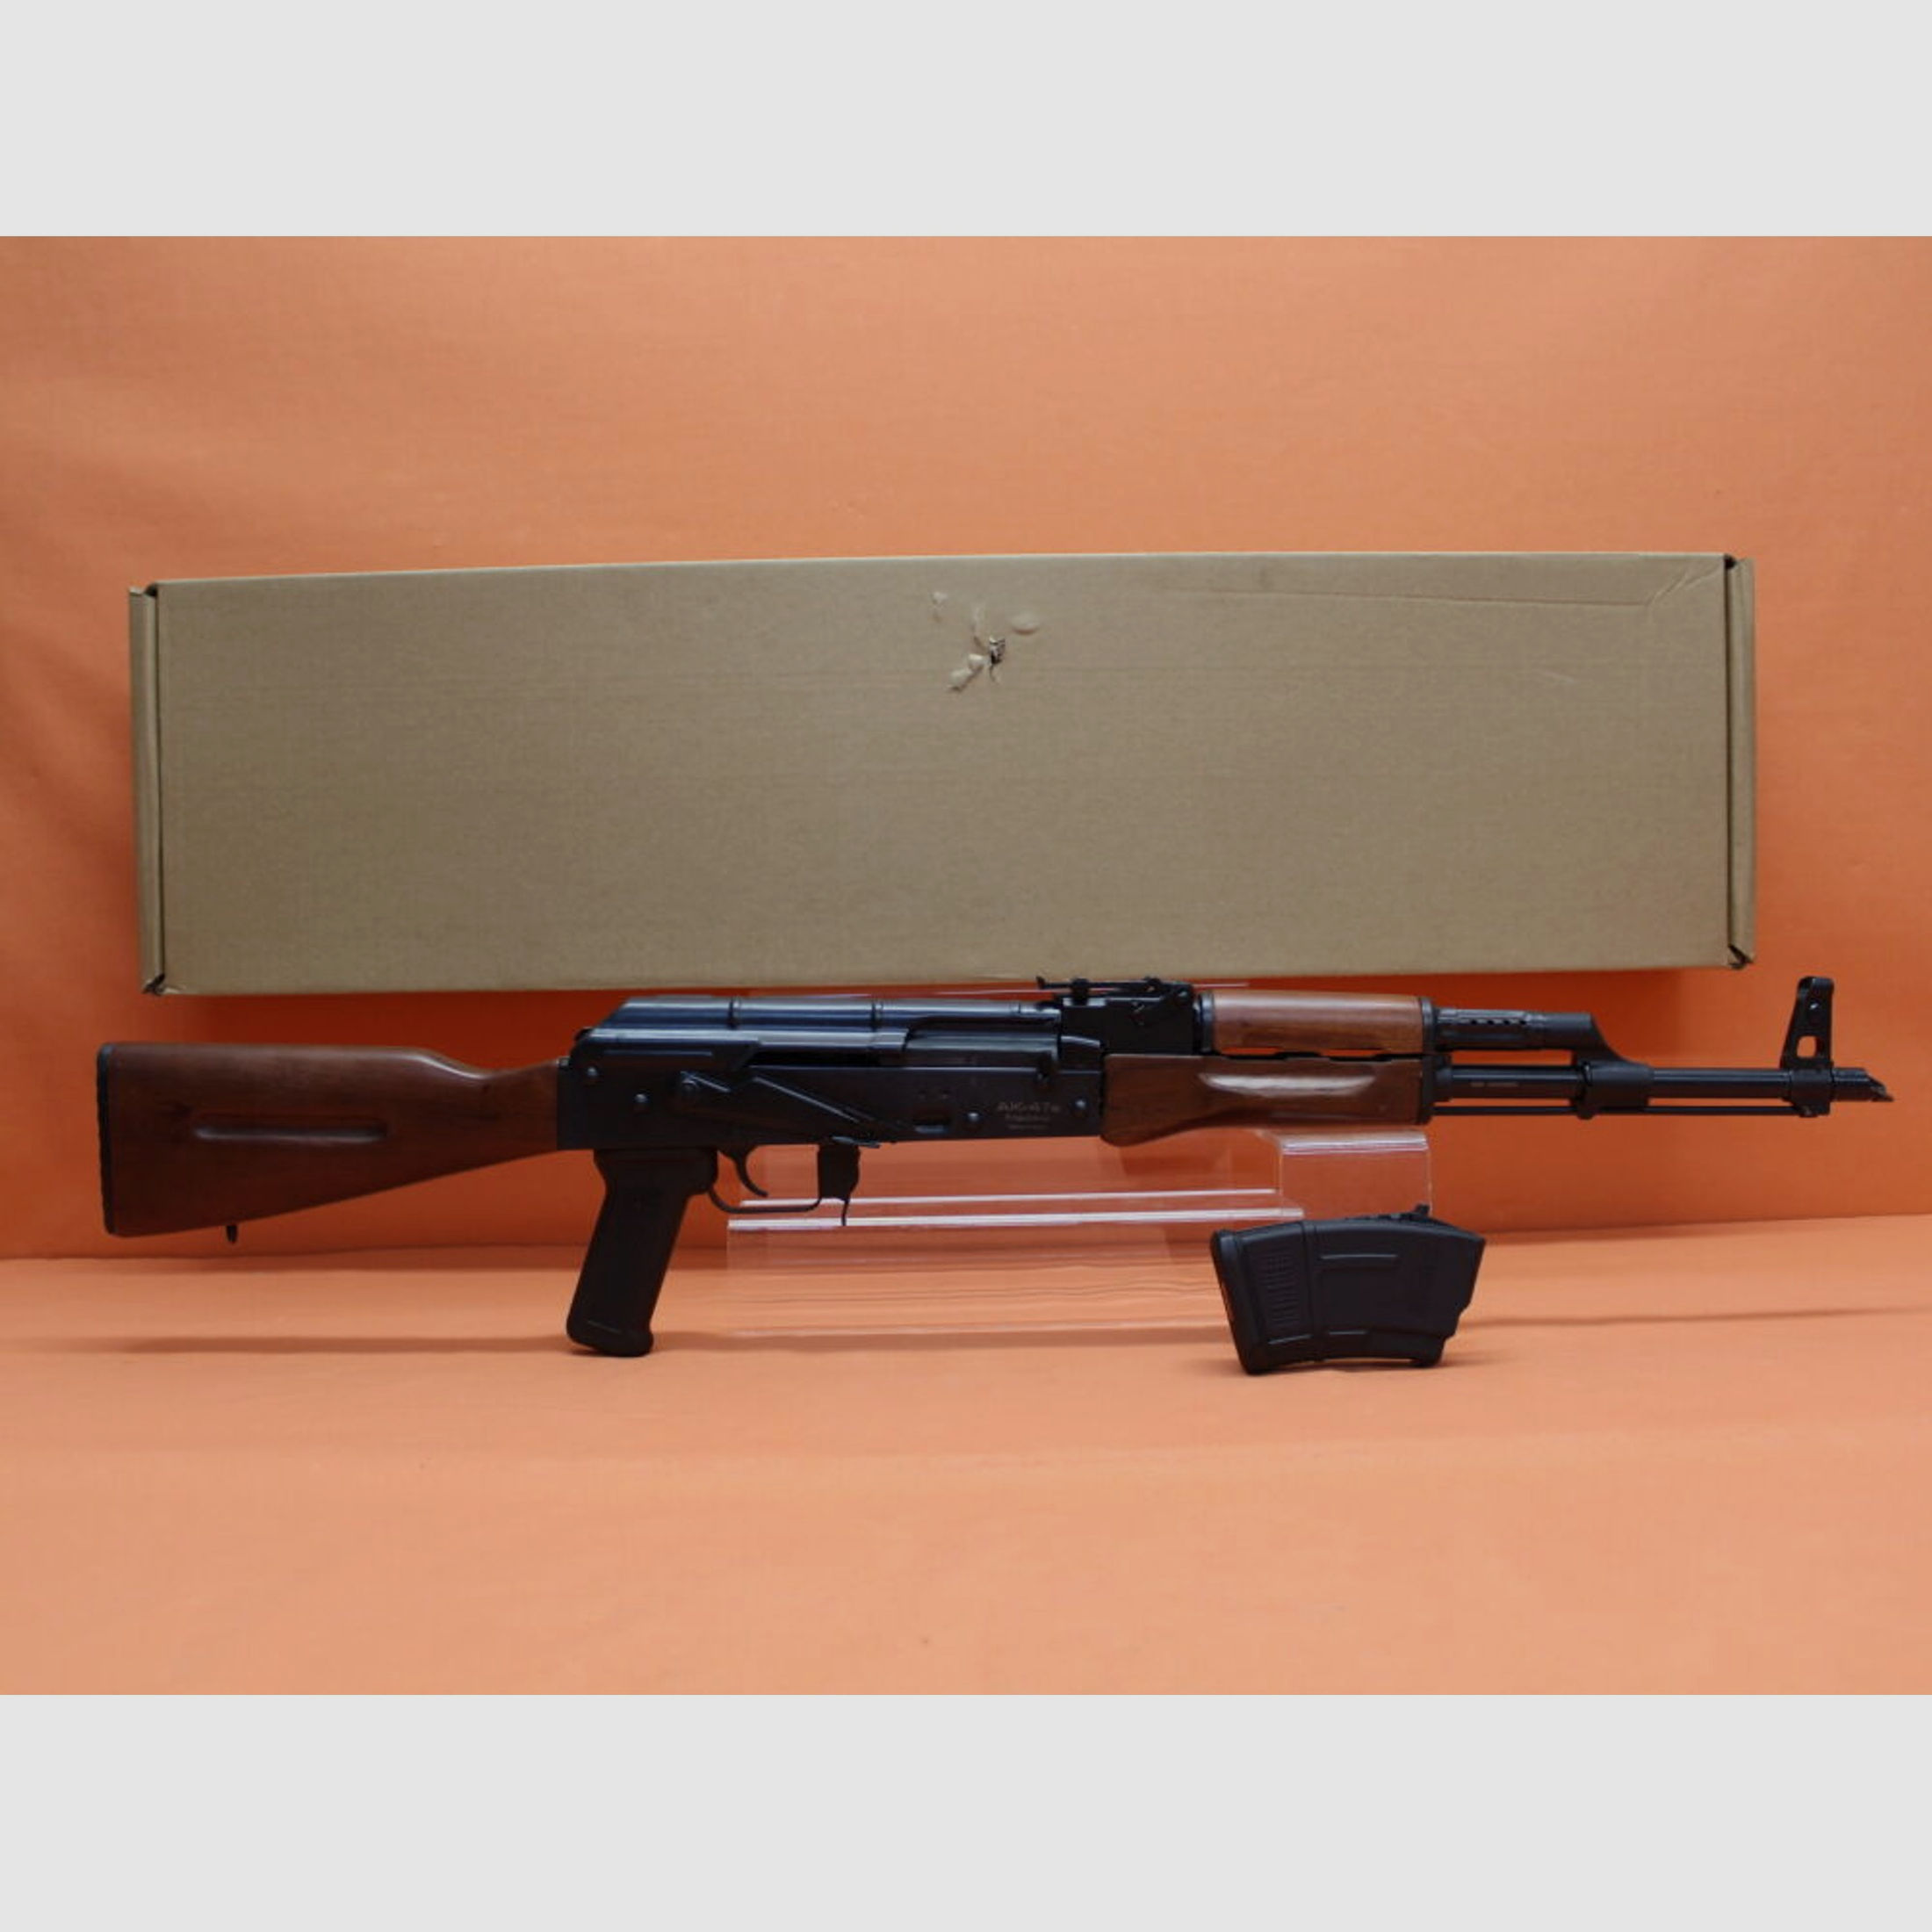 SDM Beijing	 Ha.Büchse 7,62x39 SDM AK-47s 16,5"/ 418mm Lauf/ 14mm Montageschiene/ Holzschaft (AKM/AK47)